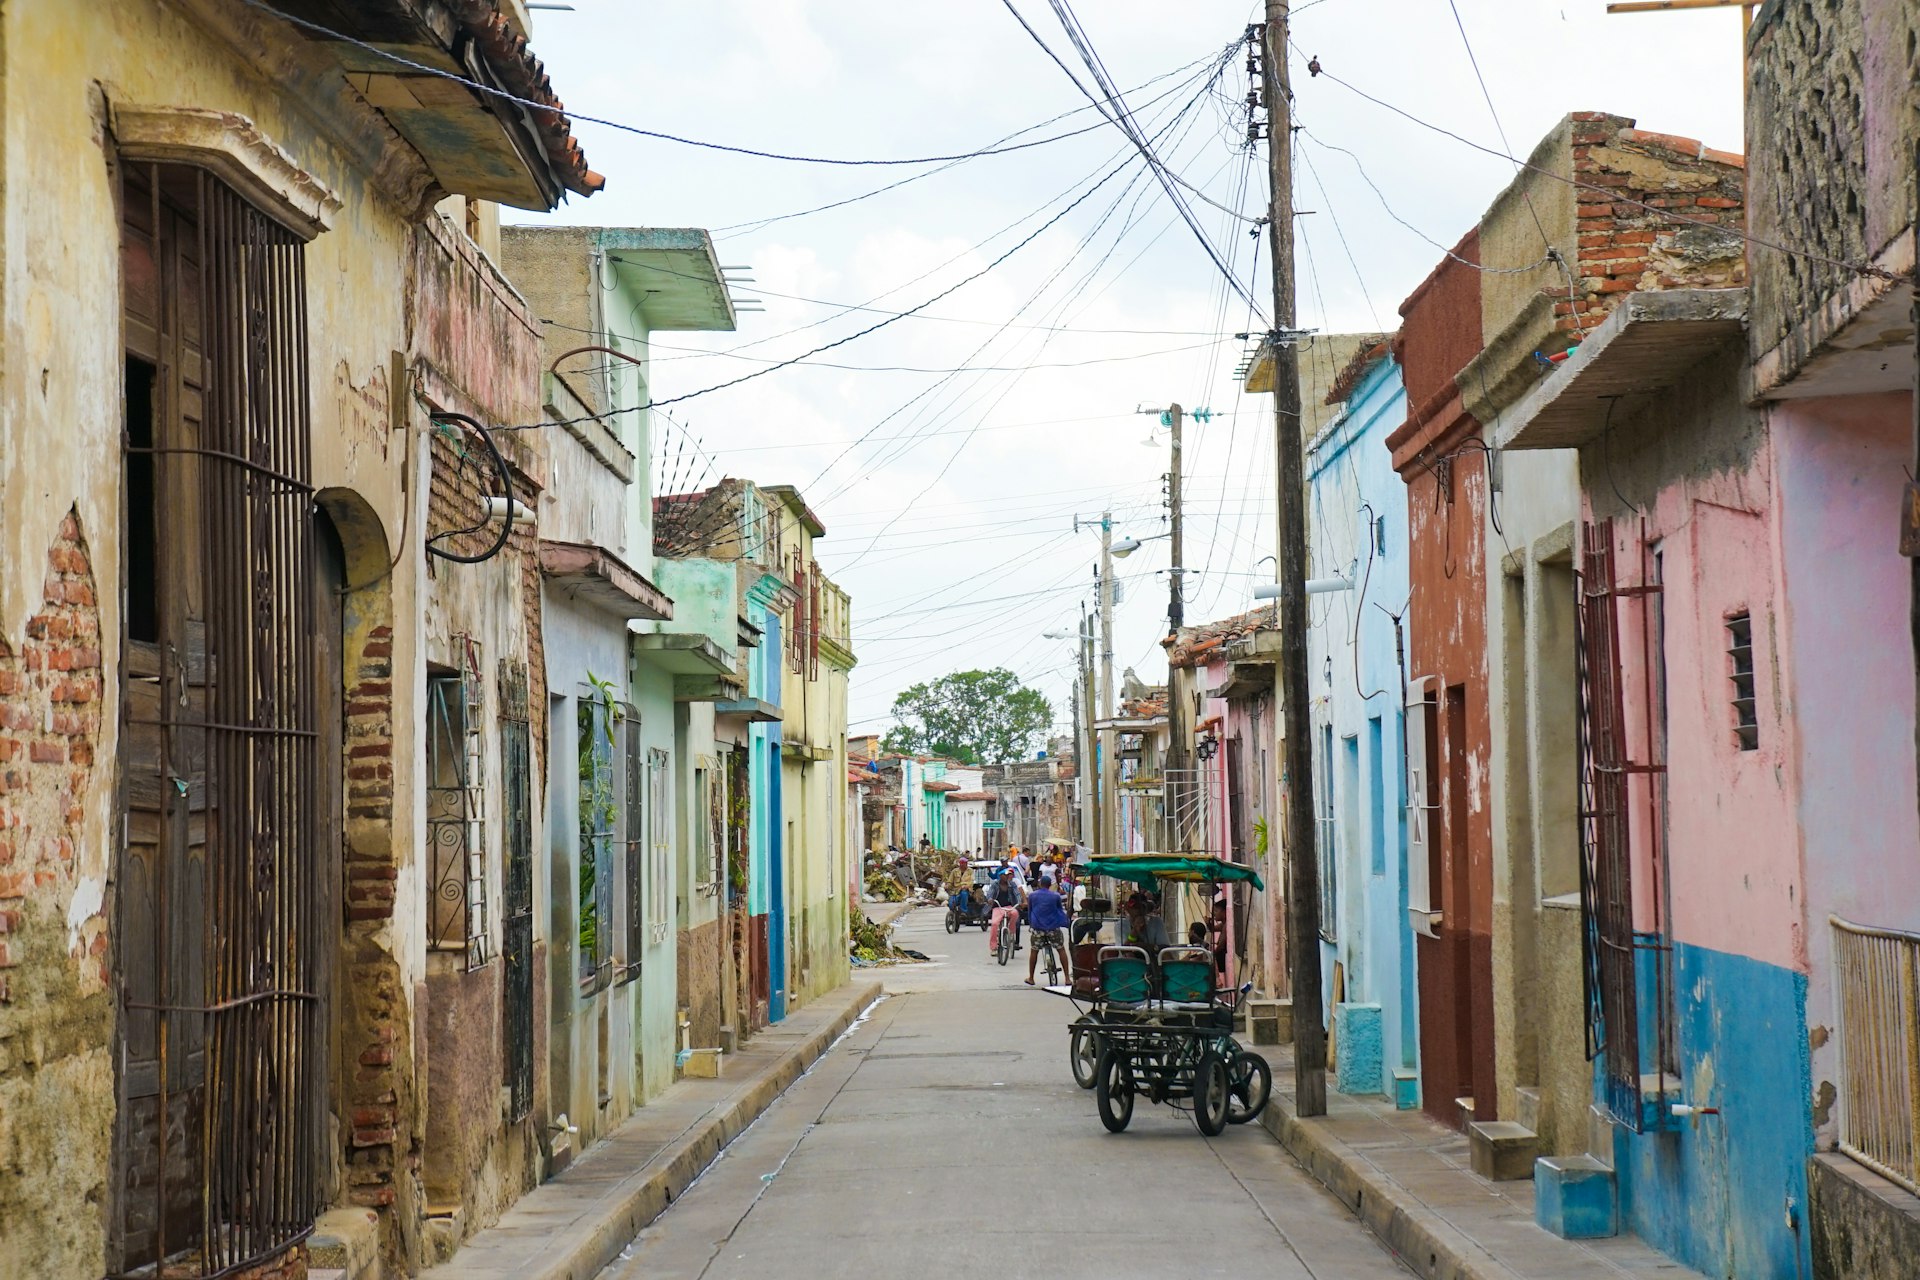 Houses along a historic street in Camagüey, Cuba